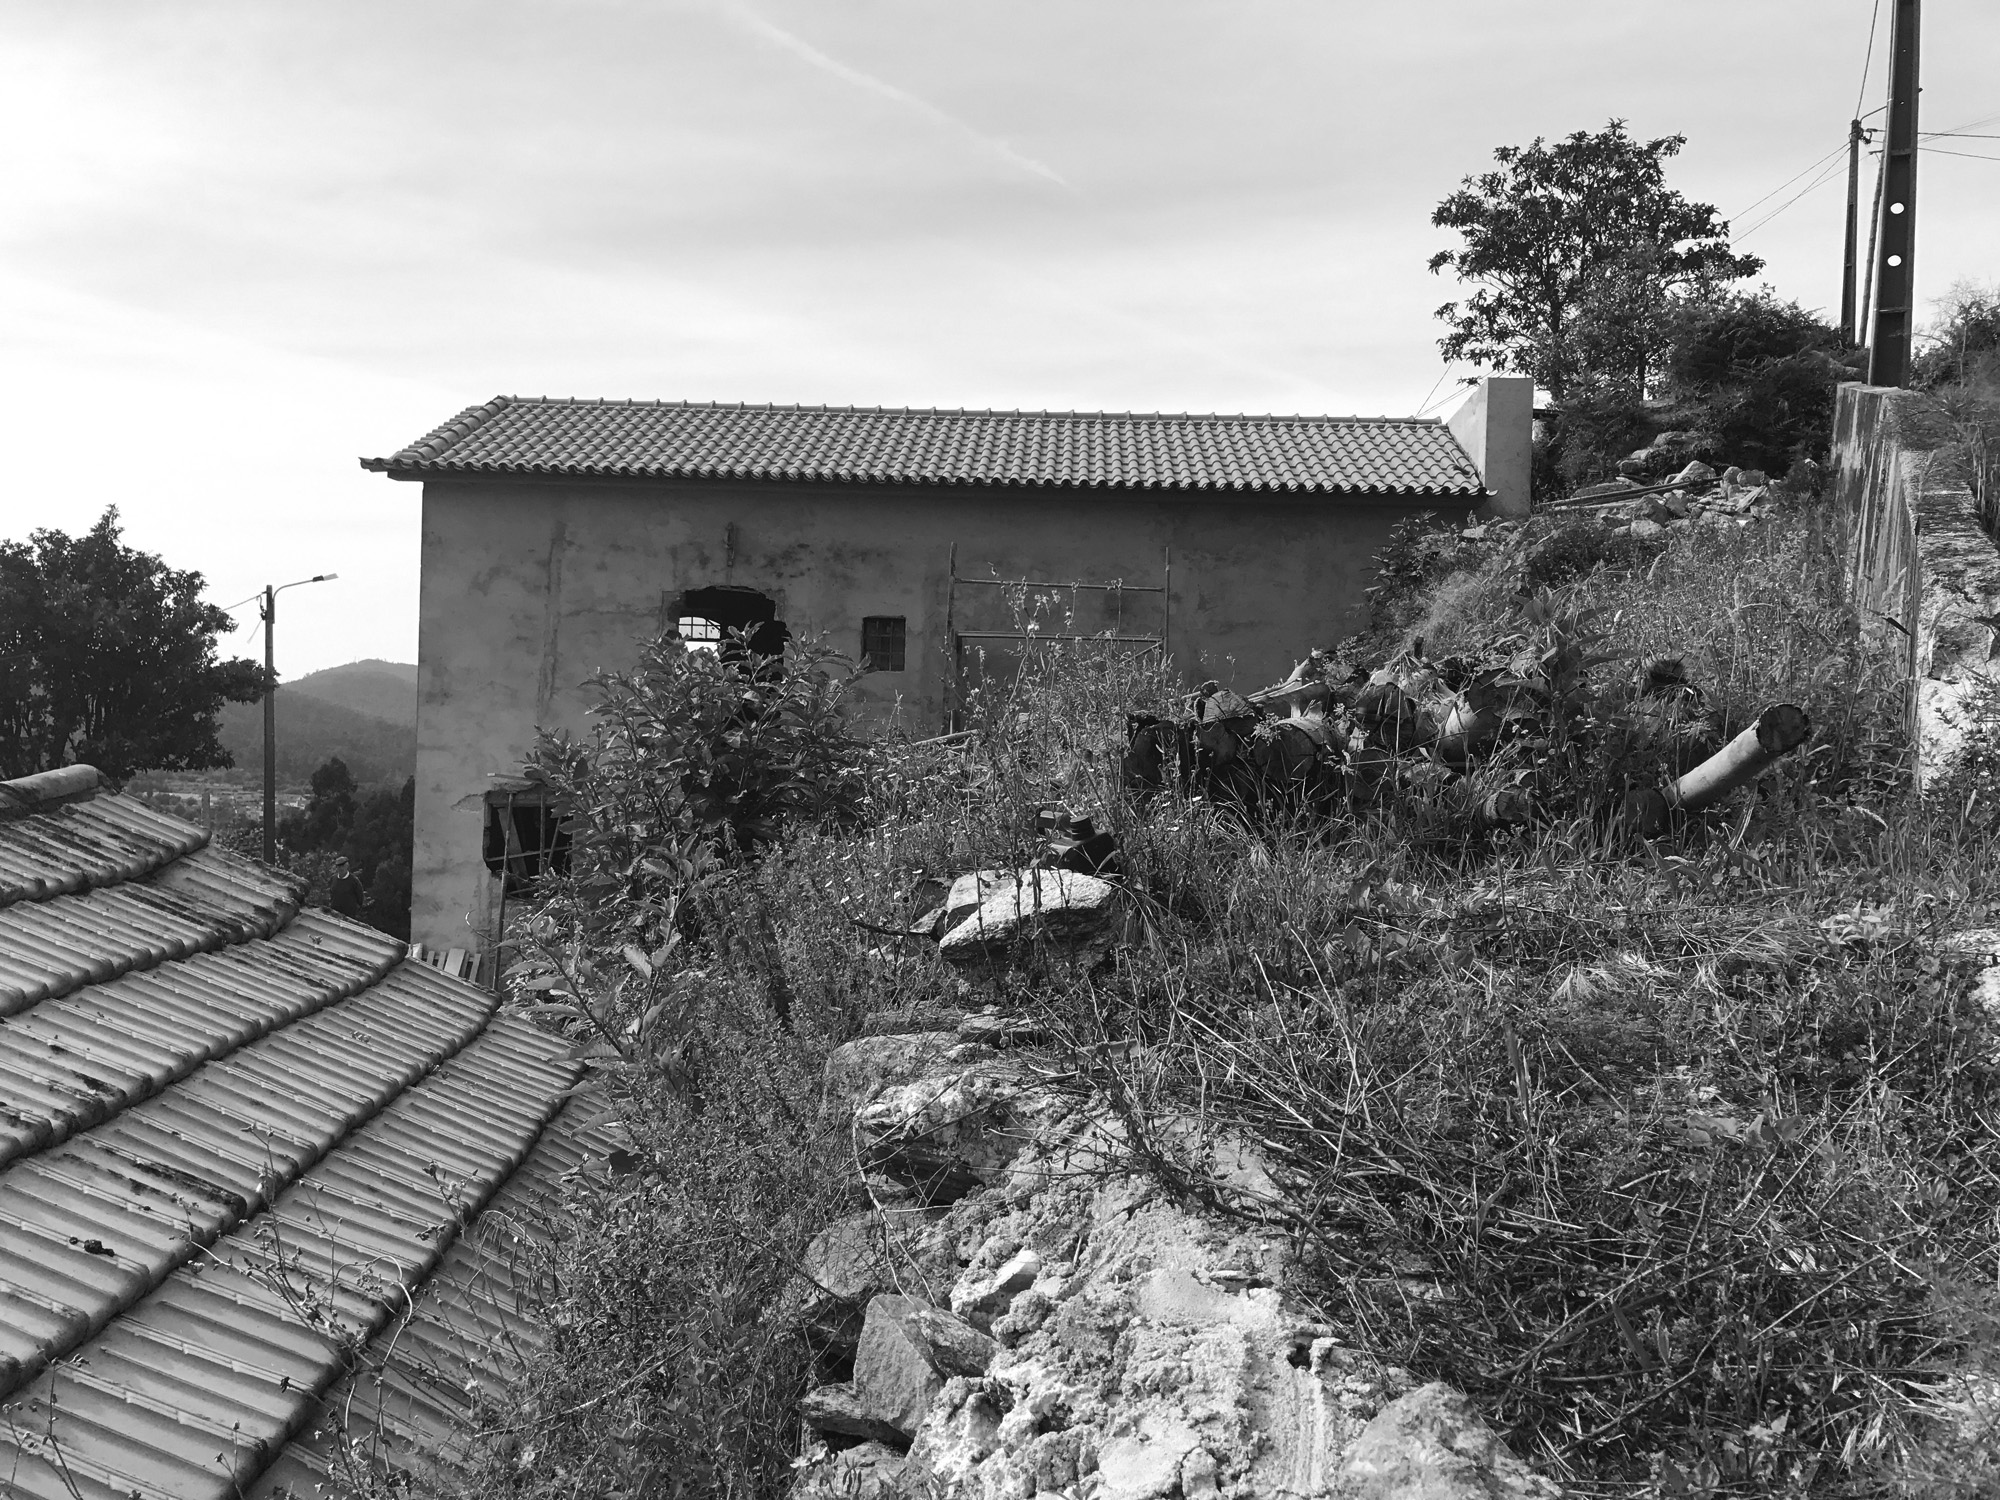 Moradia Folgorosa - Vale de Cambra - EVA atelier - Arquitectura - Obra - Arquitecto - Porto - EVA evolutionary architecture (8).jpg